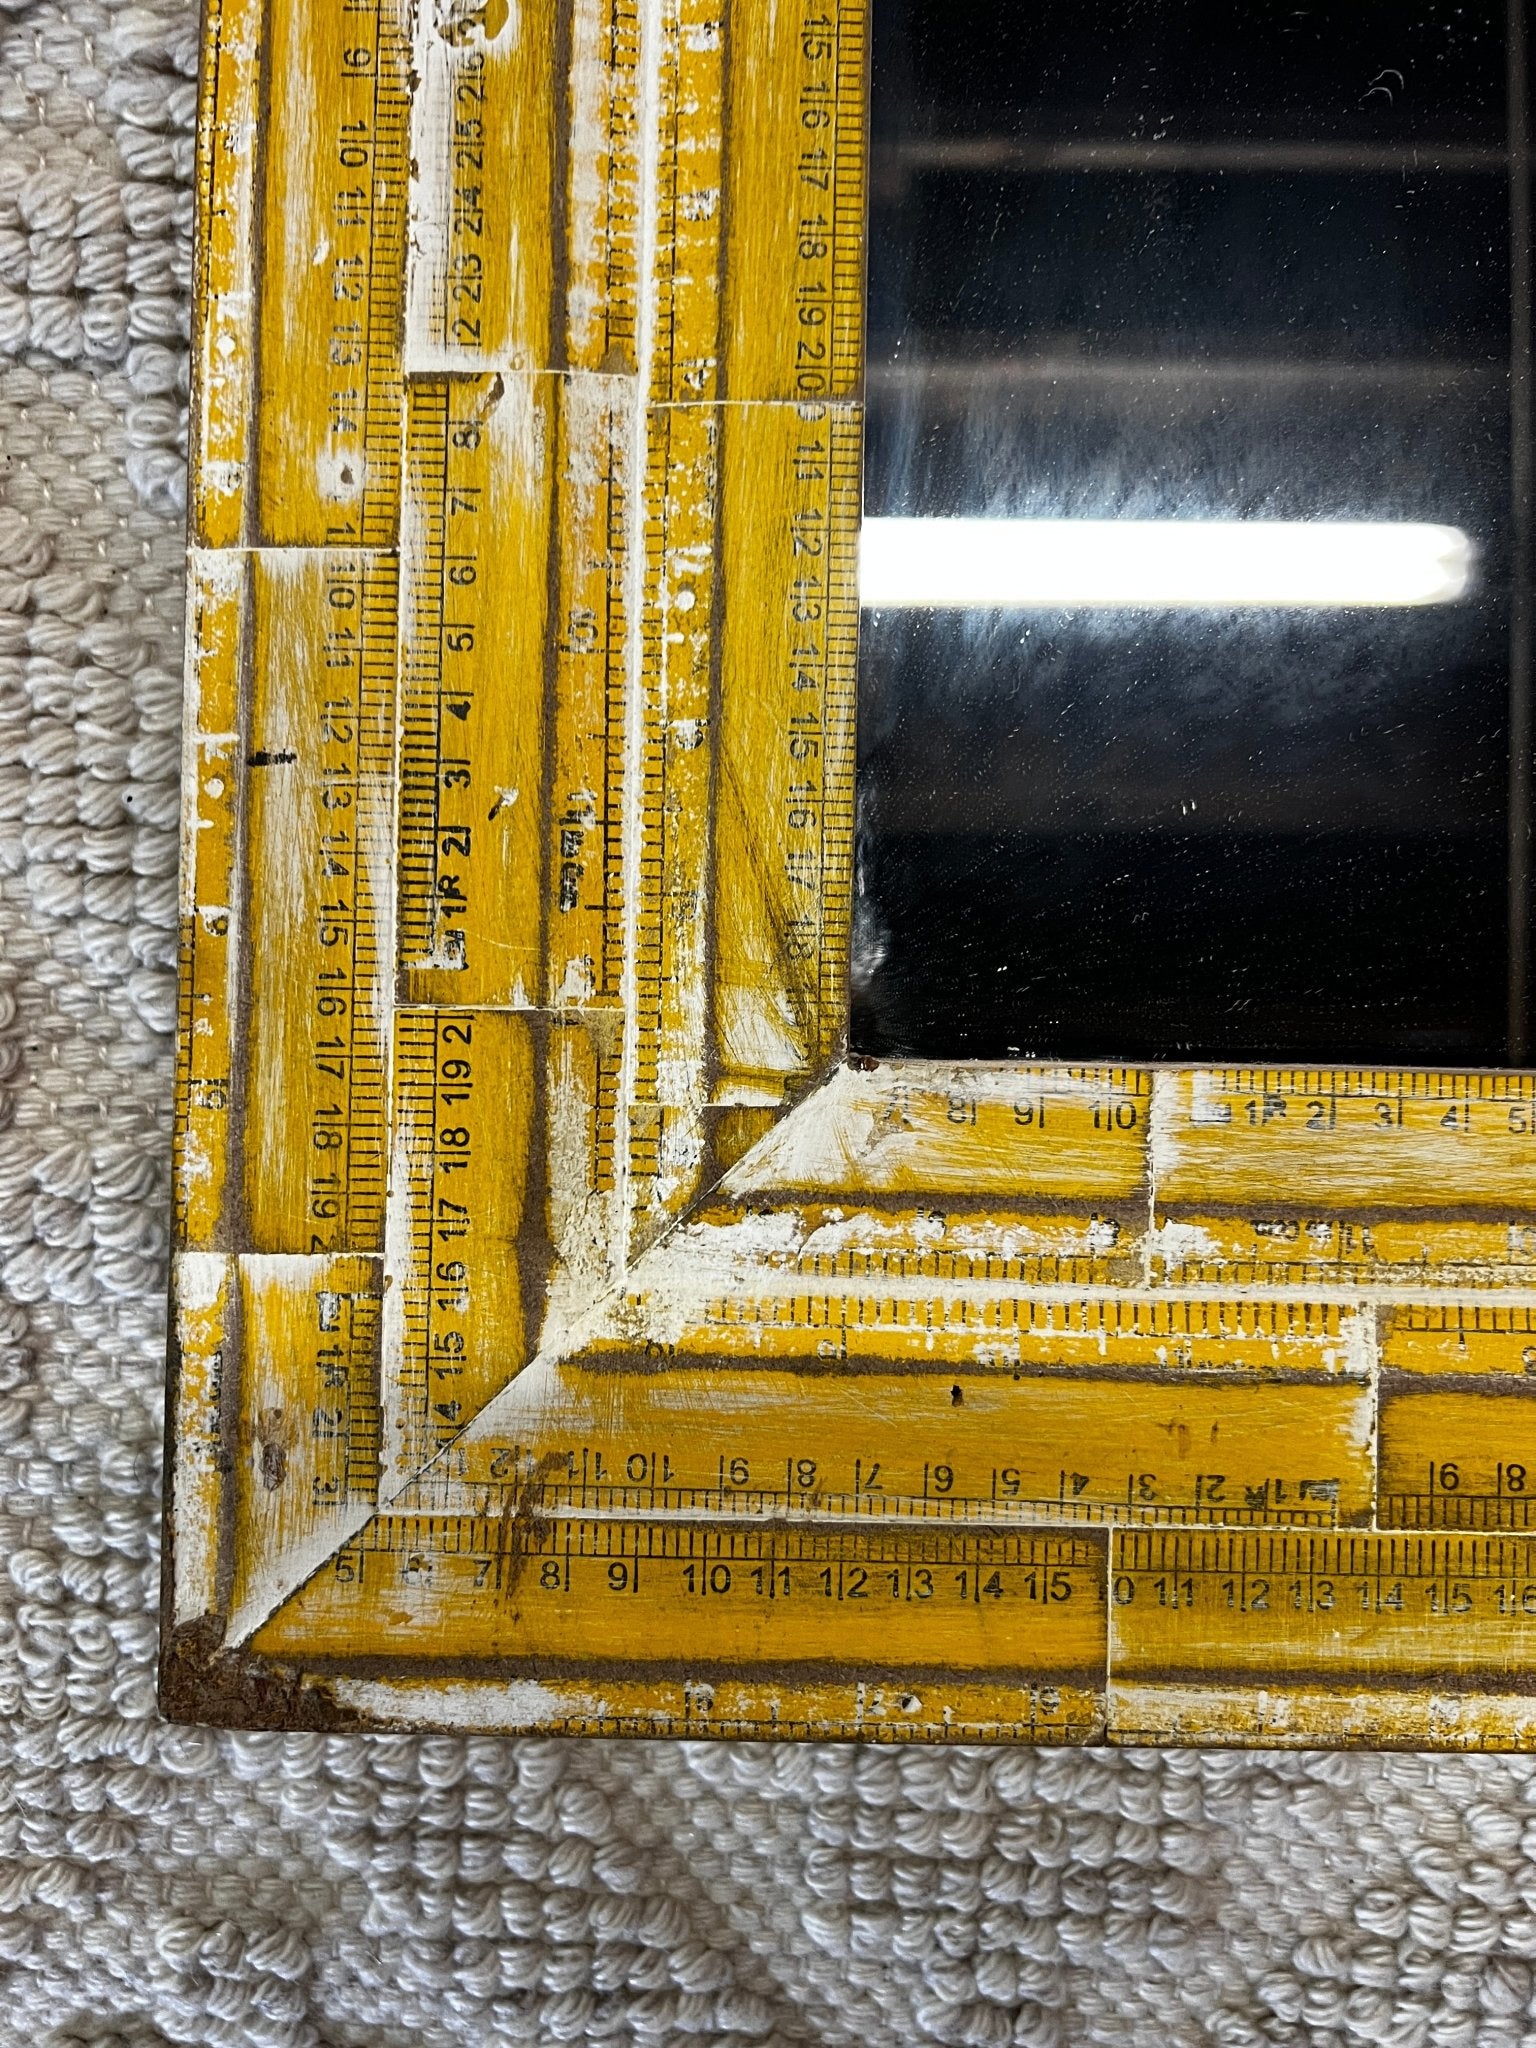 Found Wood Ruler Framed Wall Mirror 48"H x 24"W | Banana Manor Rug Company